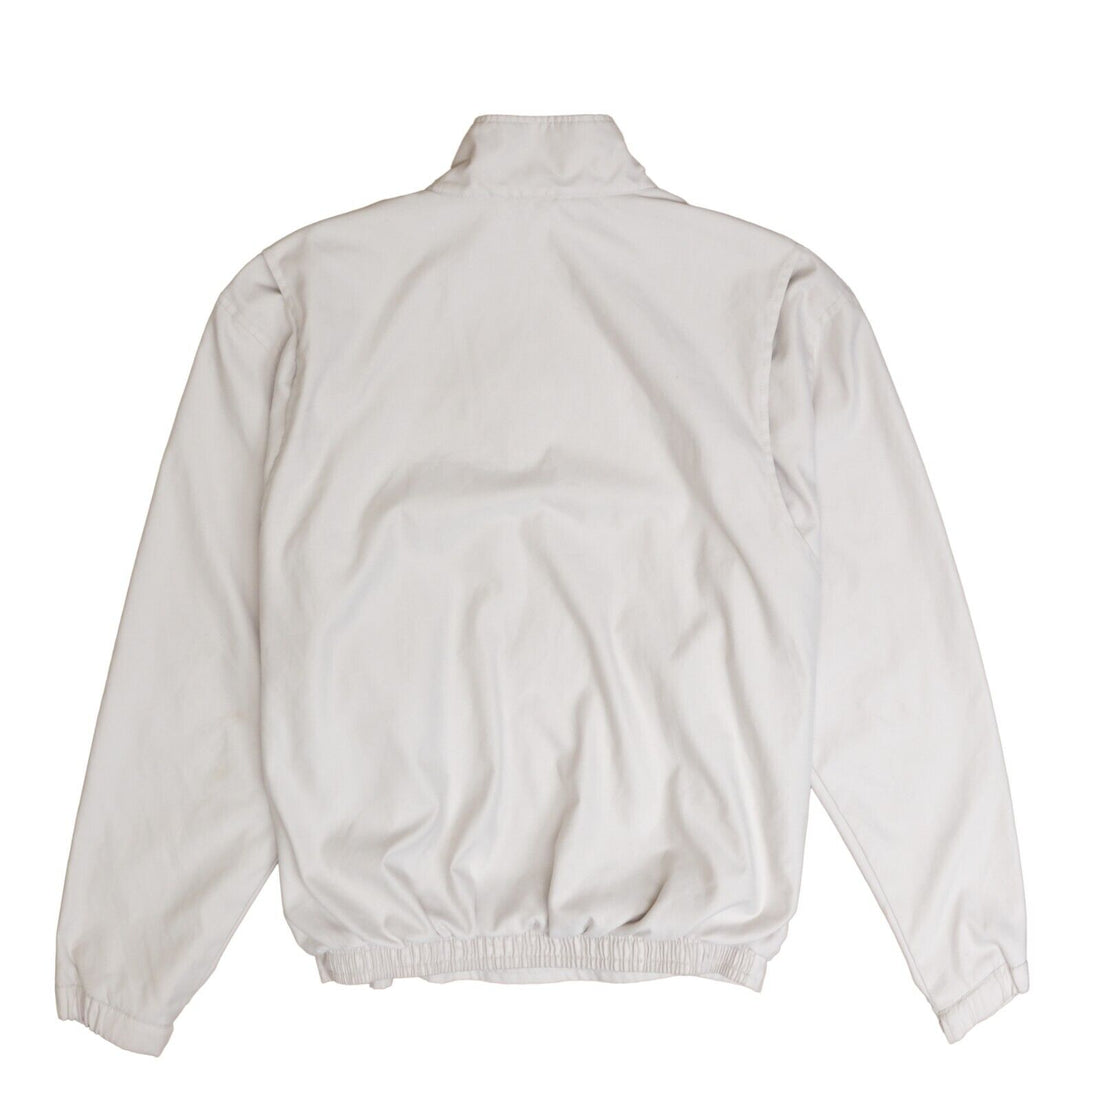 Vintage Polo Ralph Lauren 1/4 Zip Harrington Jacket Size Small Beige Pullover